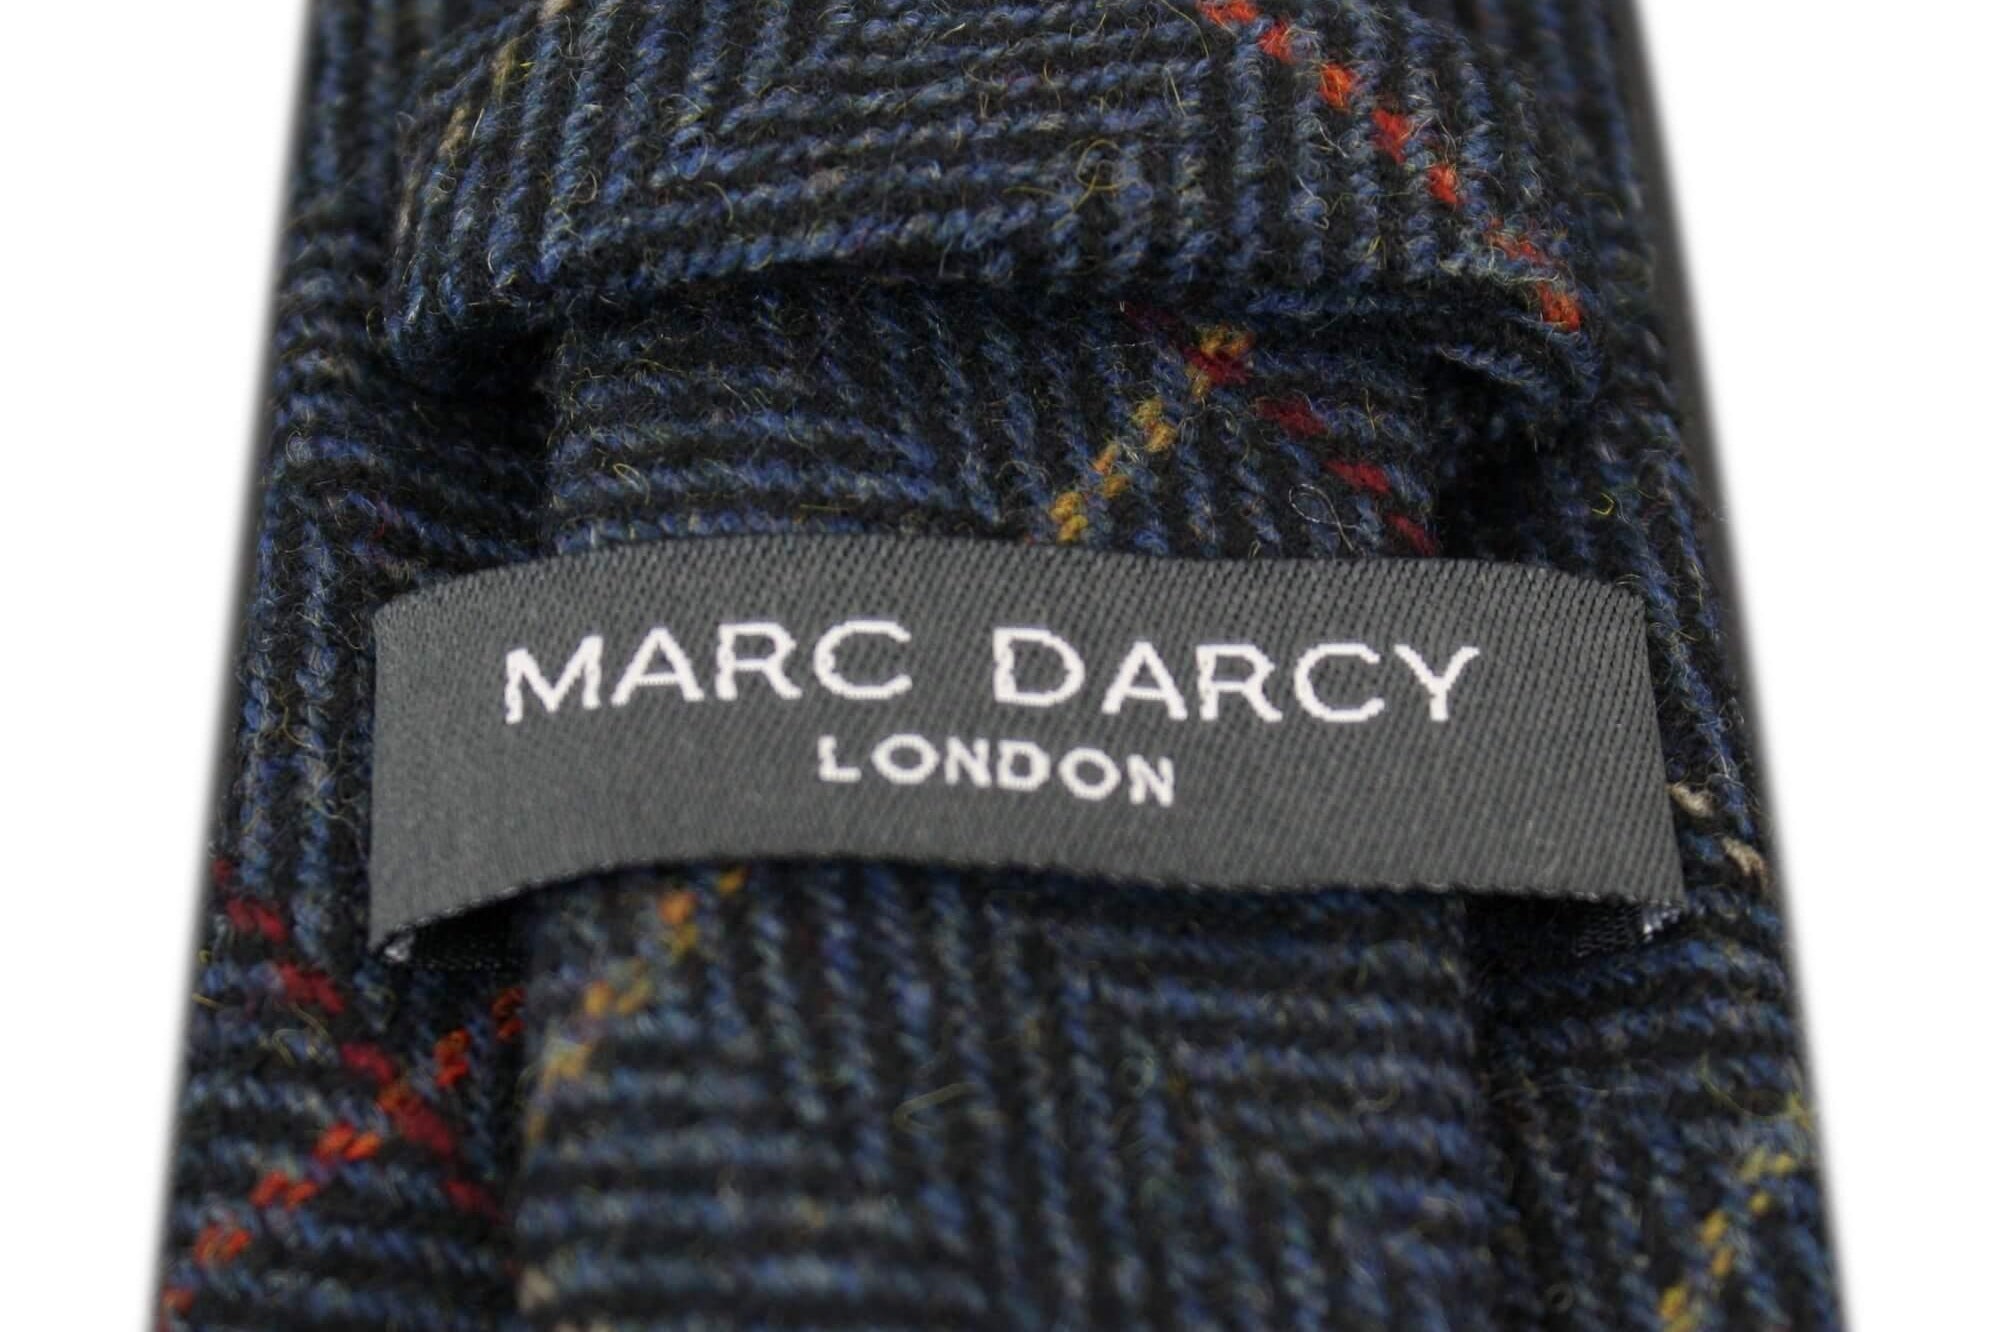 Mens Tweed Herringbone Textured Marc Darcy Ties Classic Vintage Retro Eton Navy Blue-TruClothing